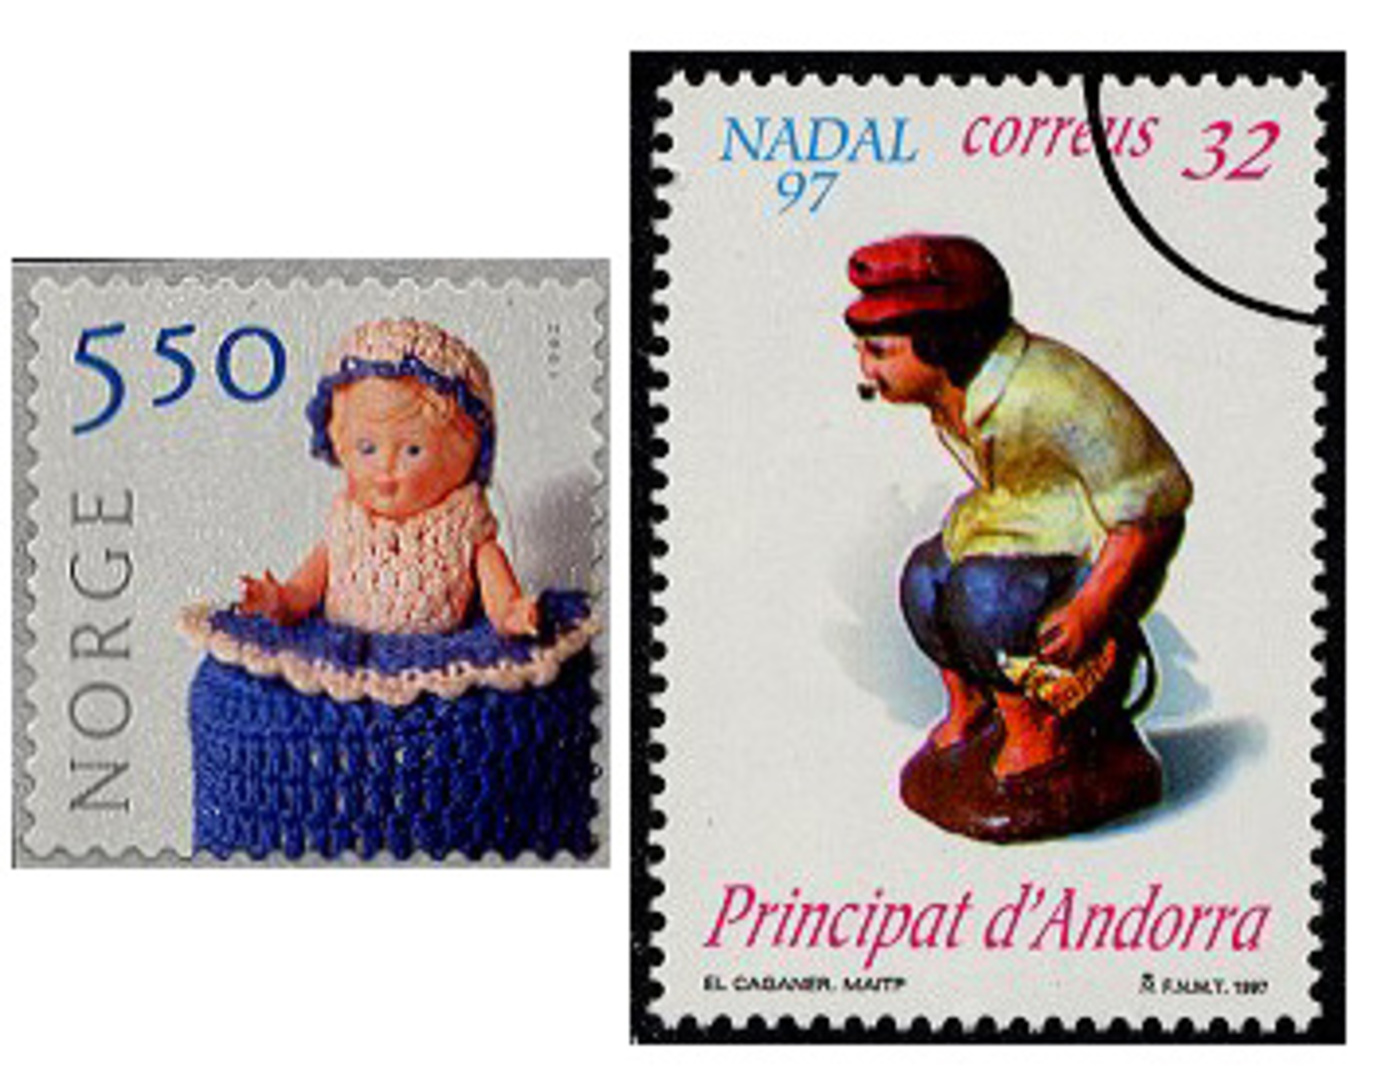 Unique stamps